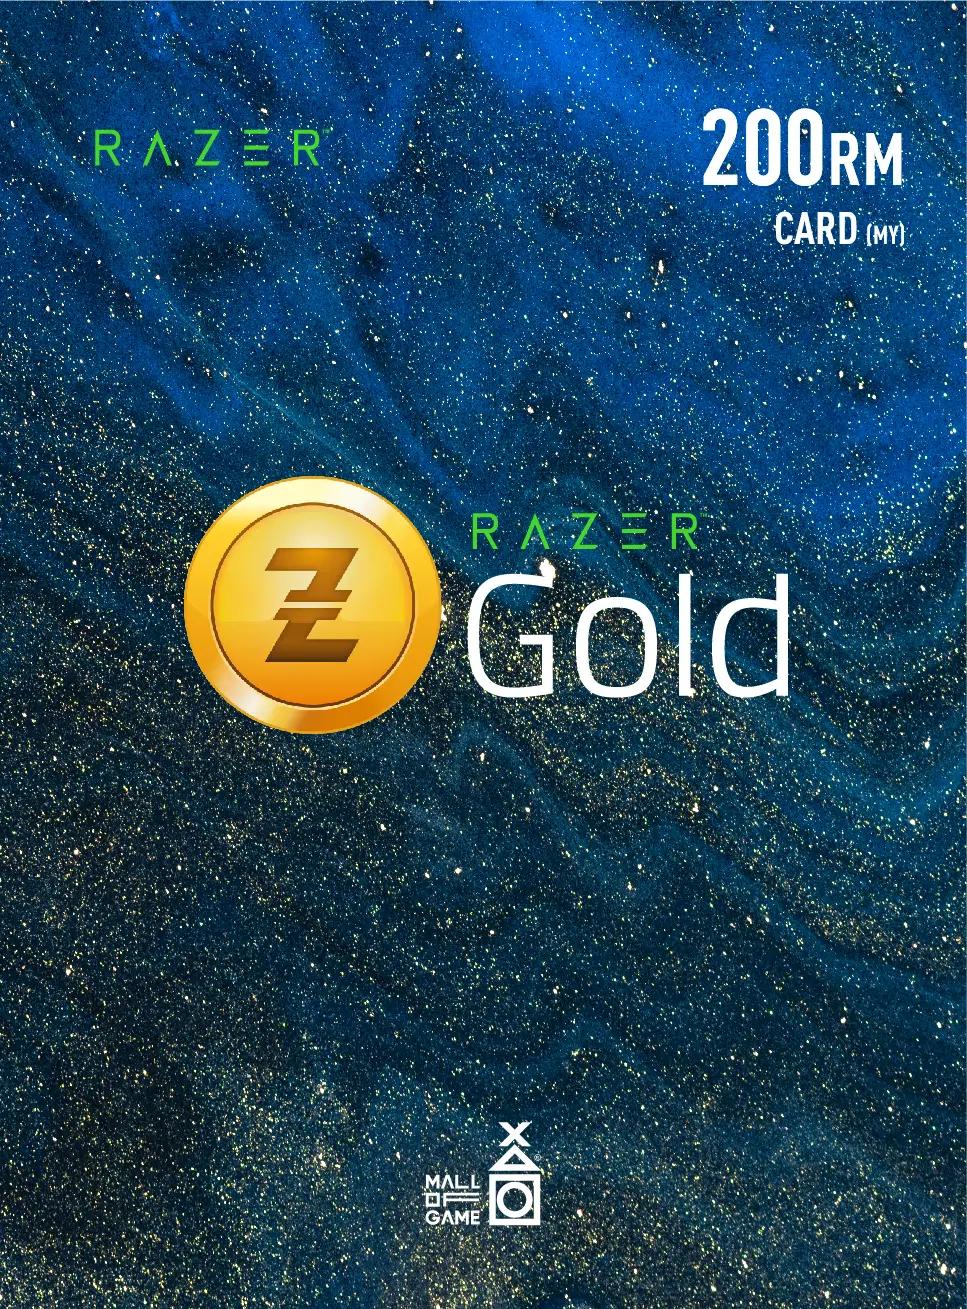 Razer Gold RM200 (MY)